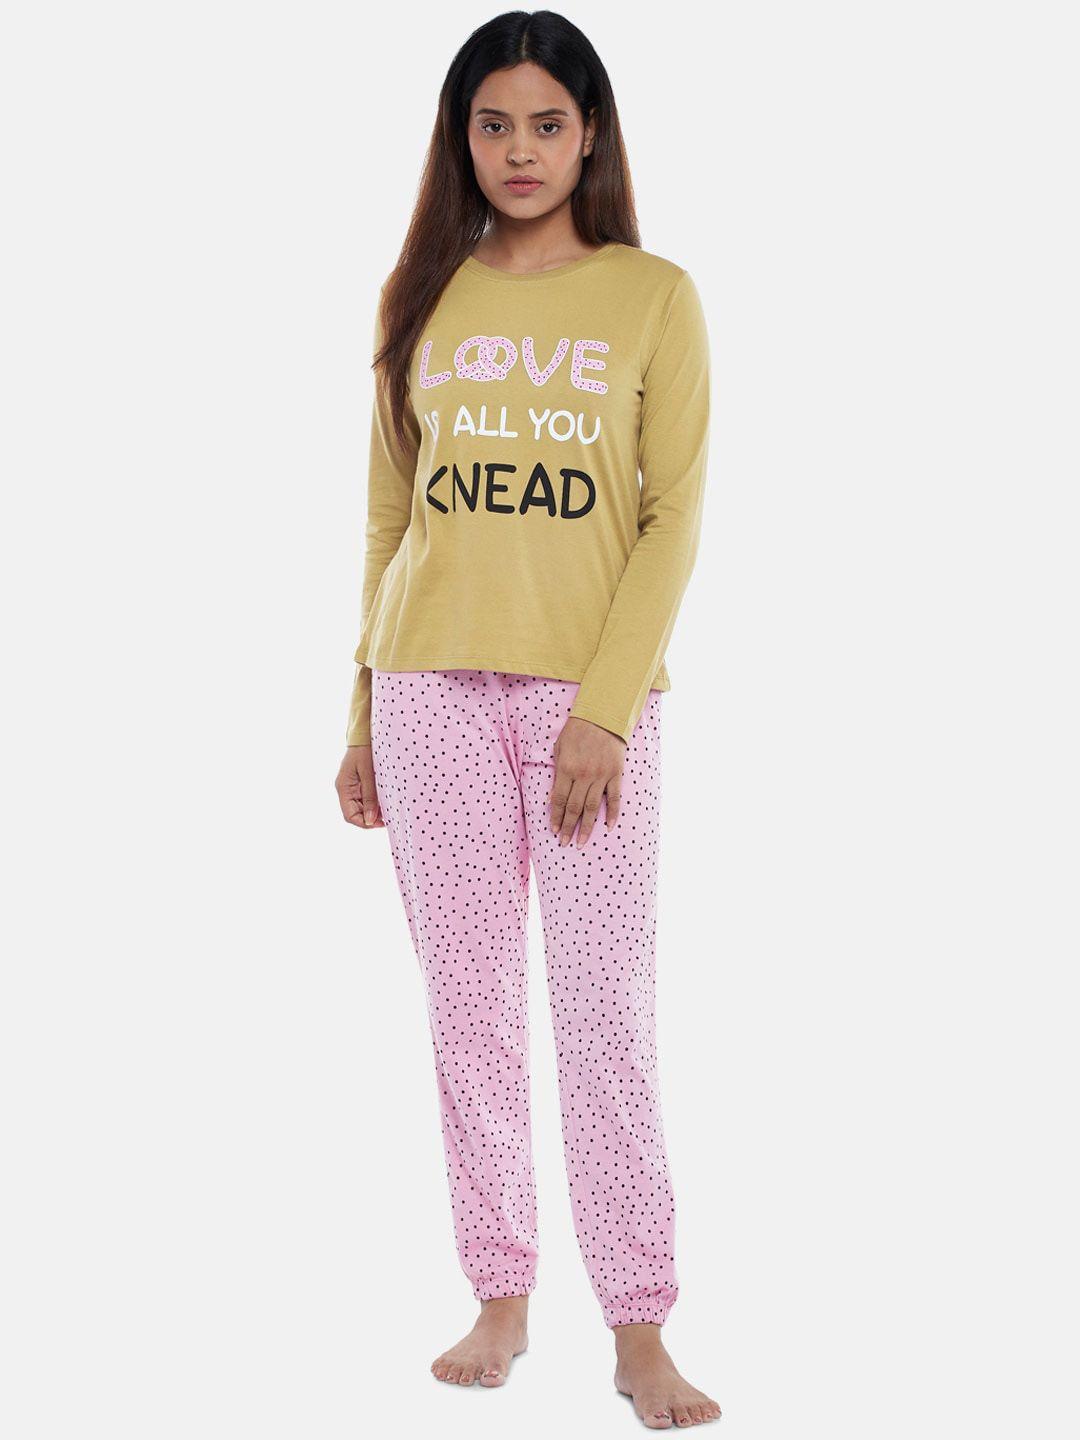 dreamz-by-pantaloons-women-khaki-&-pink-printed-night-suit